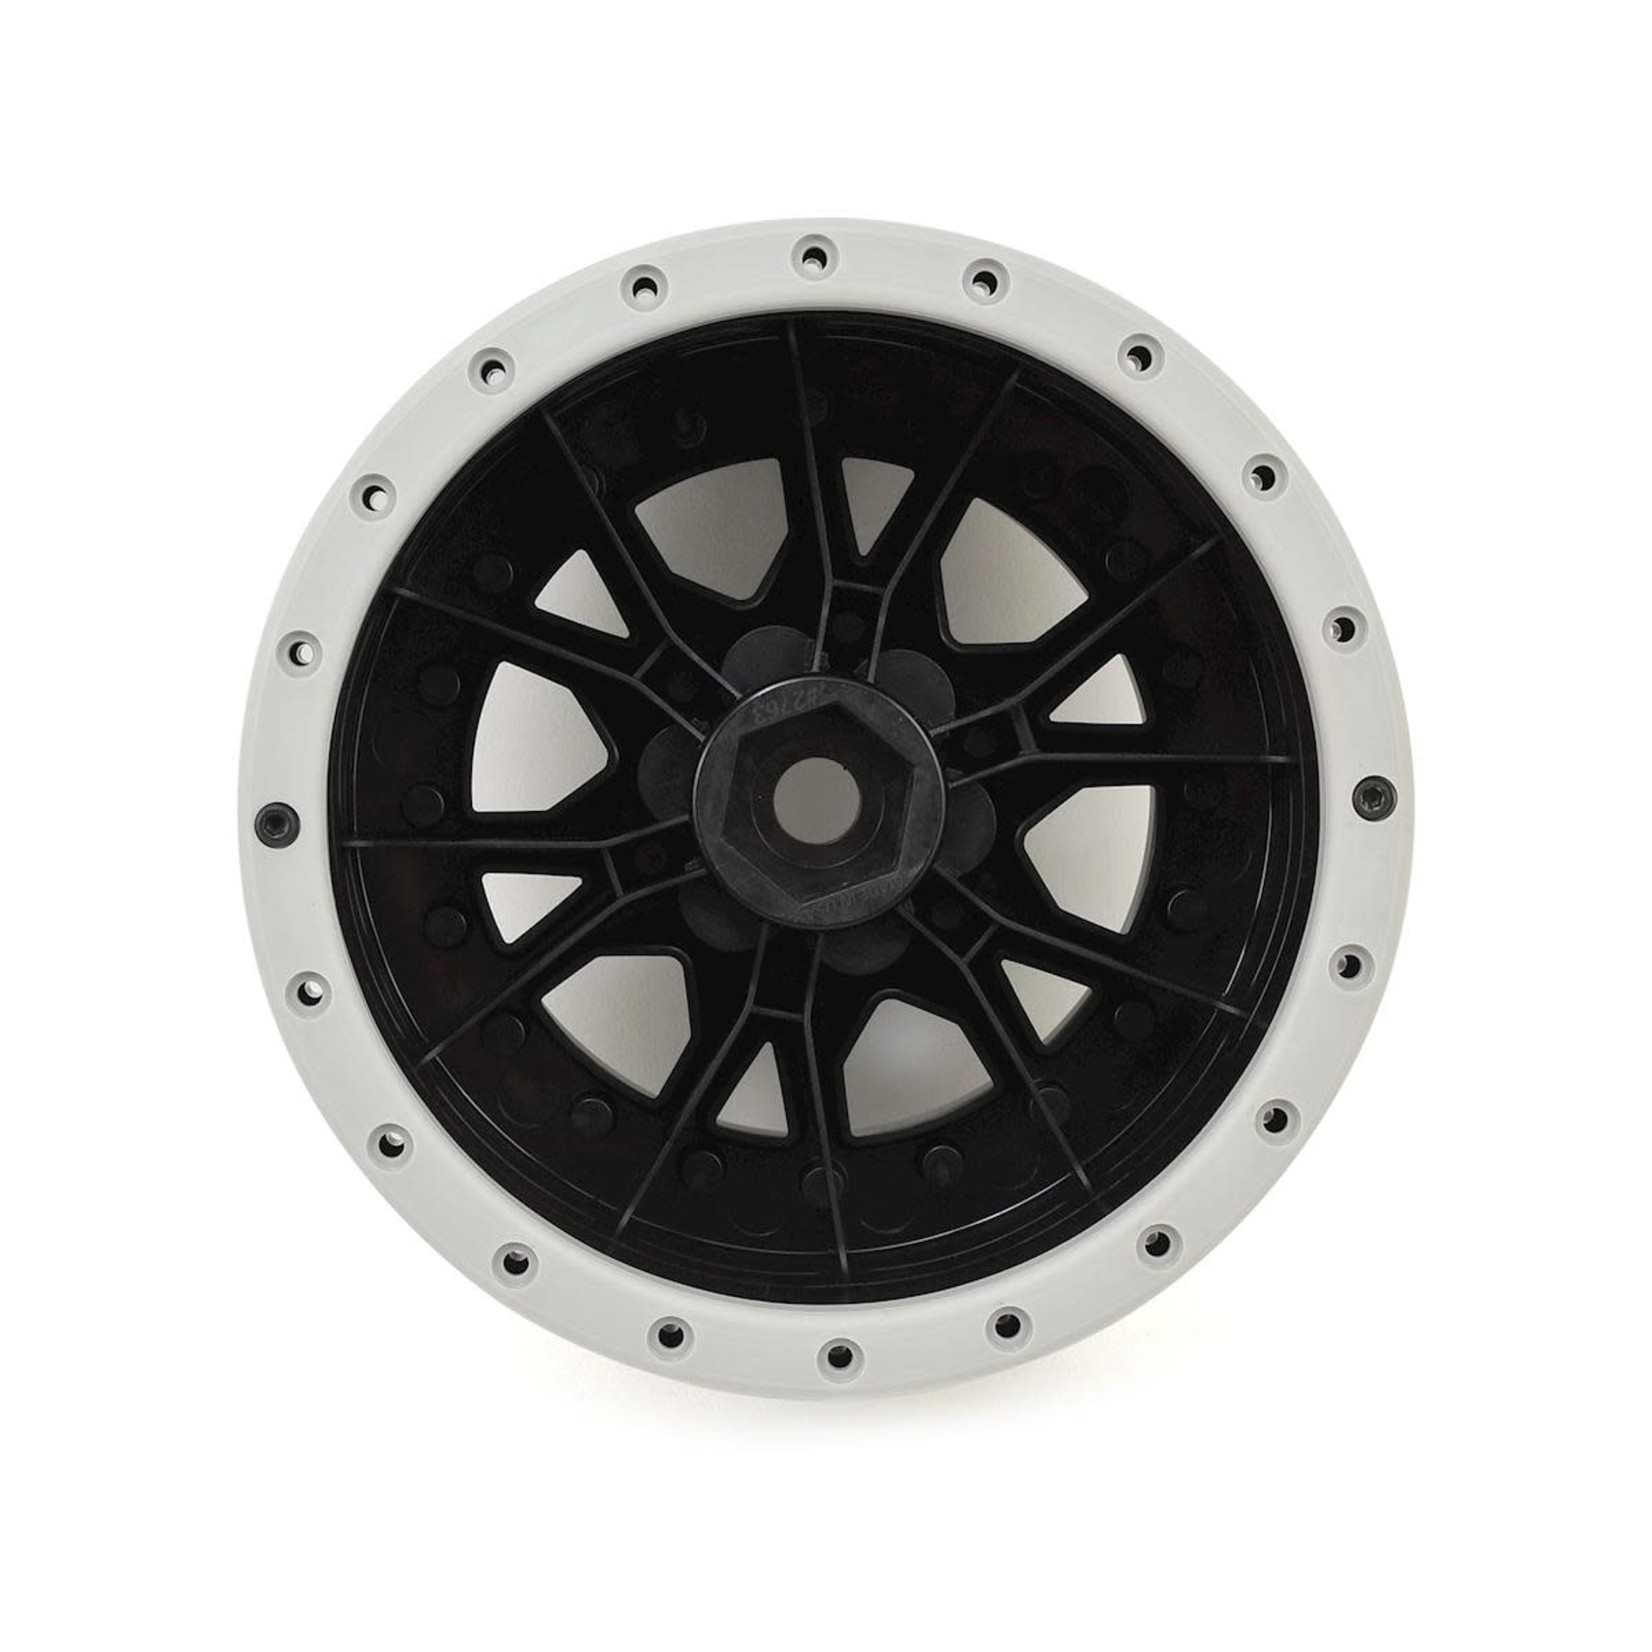 Pro-Line Pro-Line X-MAXX Impulse Pro-Loc Wheels (Black w/Stone Gray Rings) (2) #2763-03